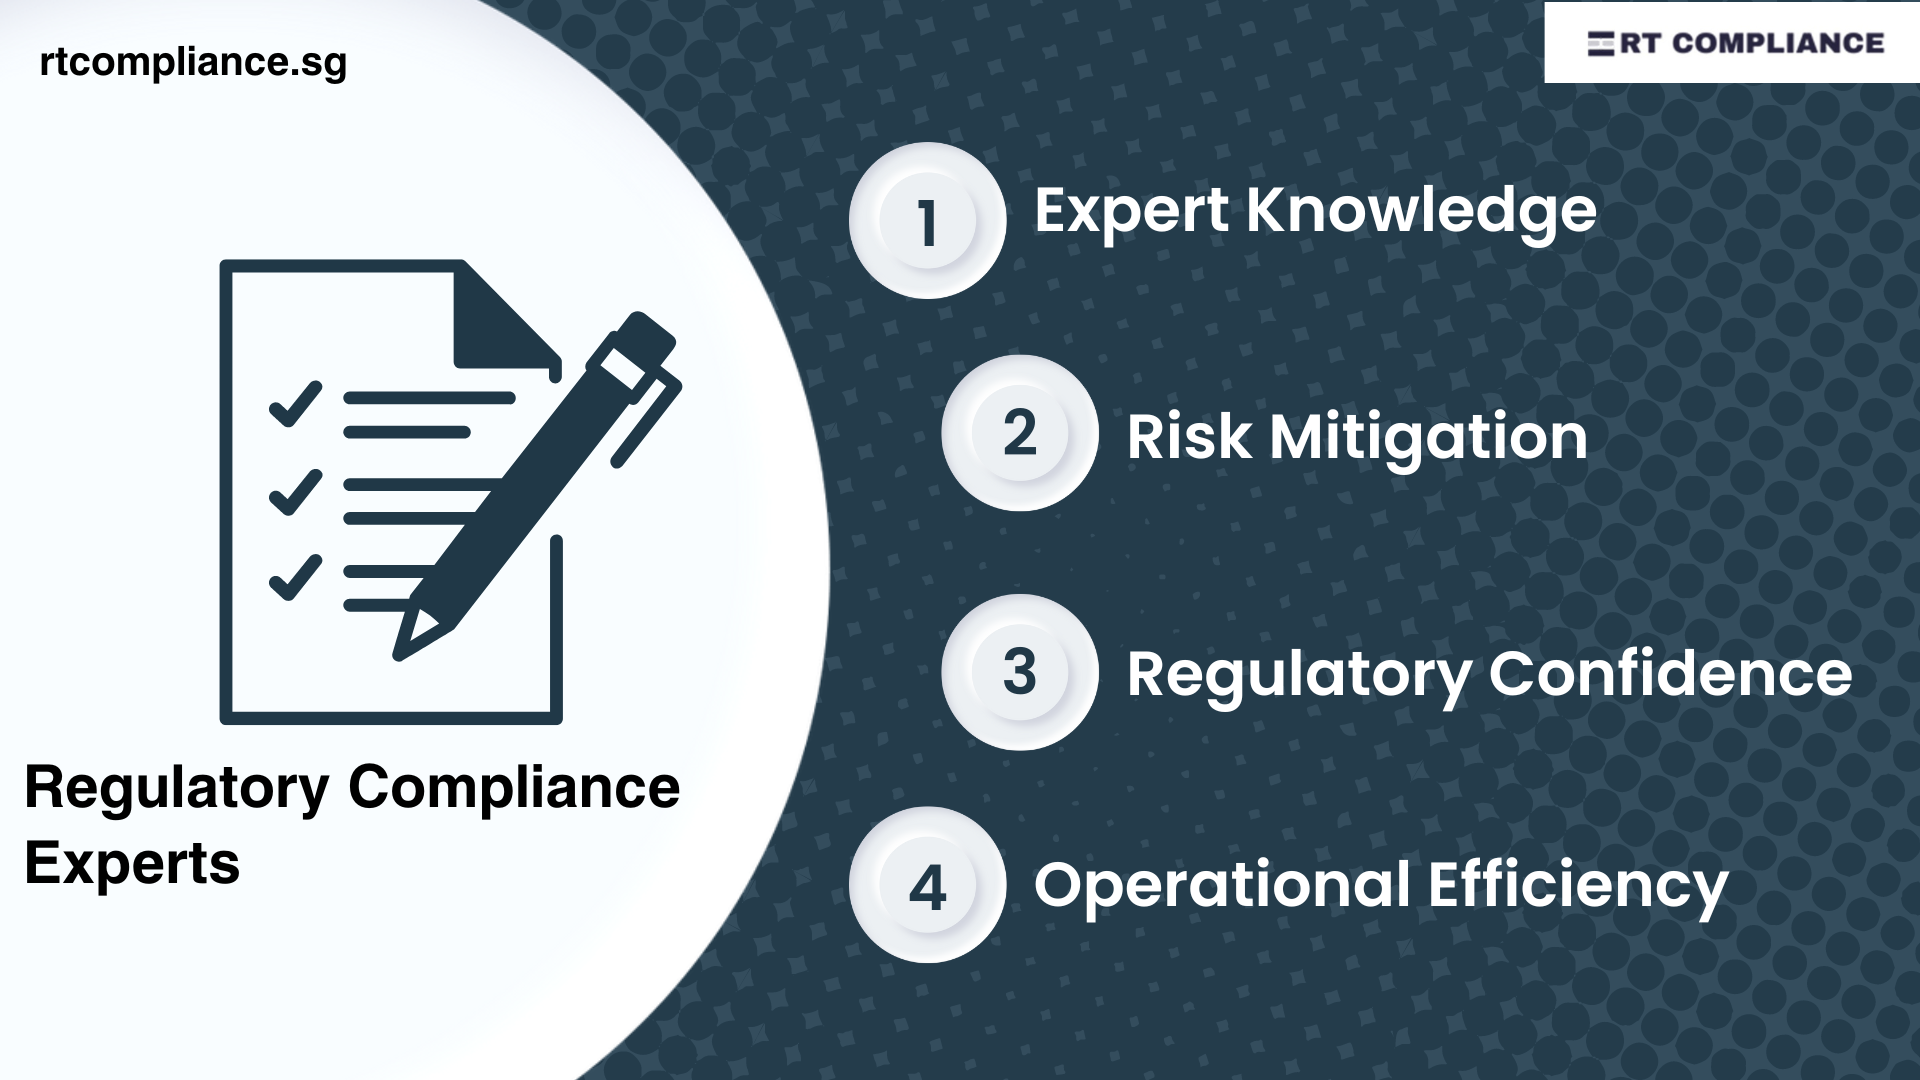 Regulatory Compliance Experts